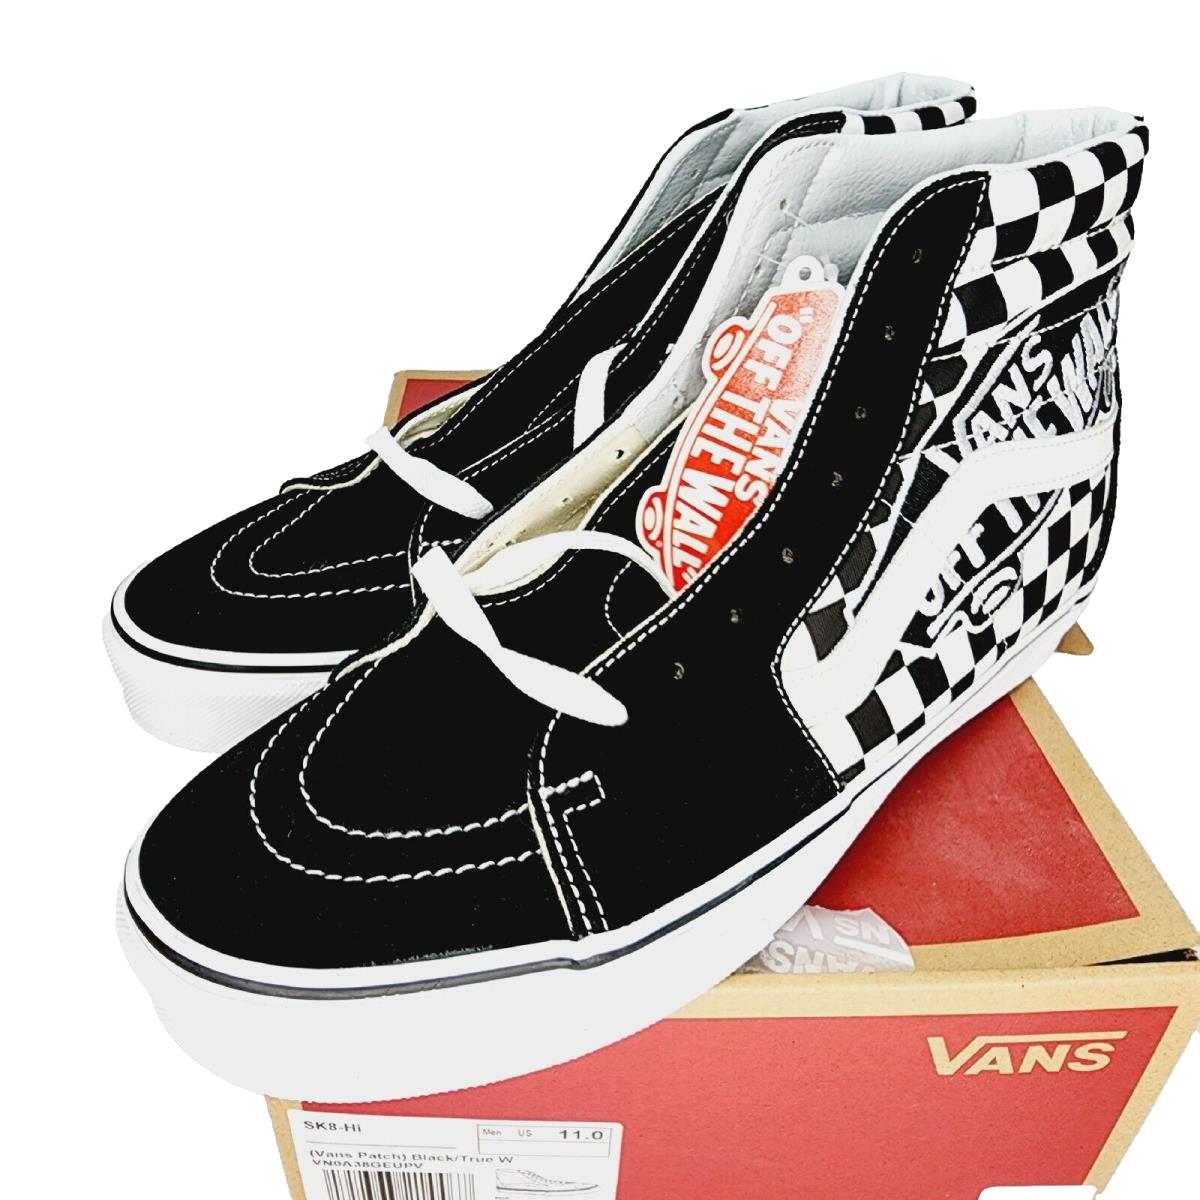 Vans Men s Shoes Size 11 Black White Checkerboard SK8 HI Patch Skateboard